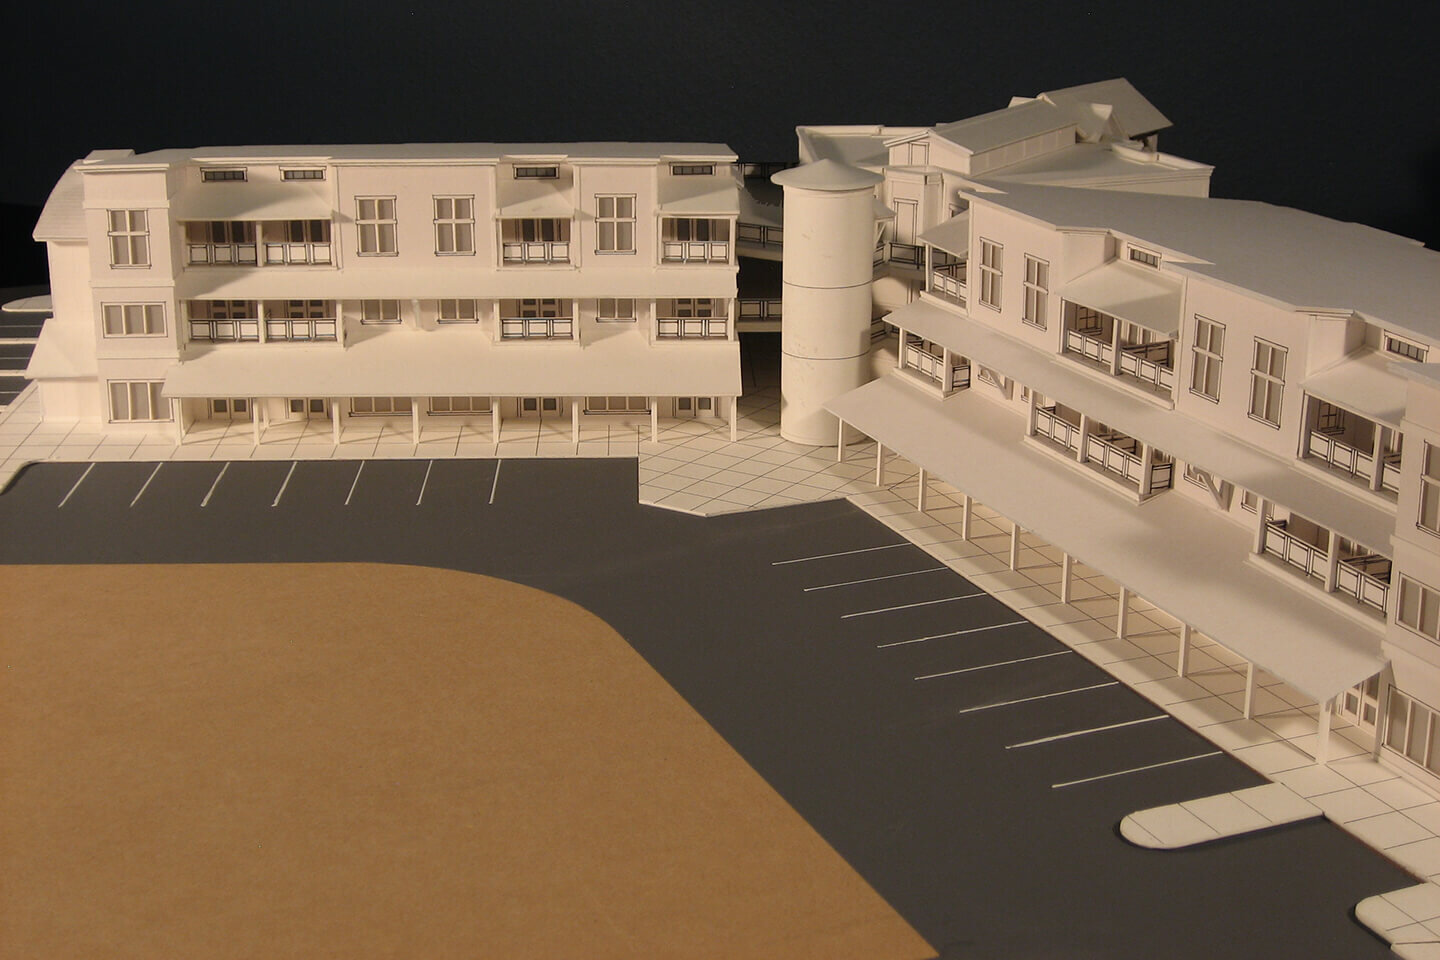 3D model of 3-story buildings